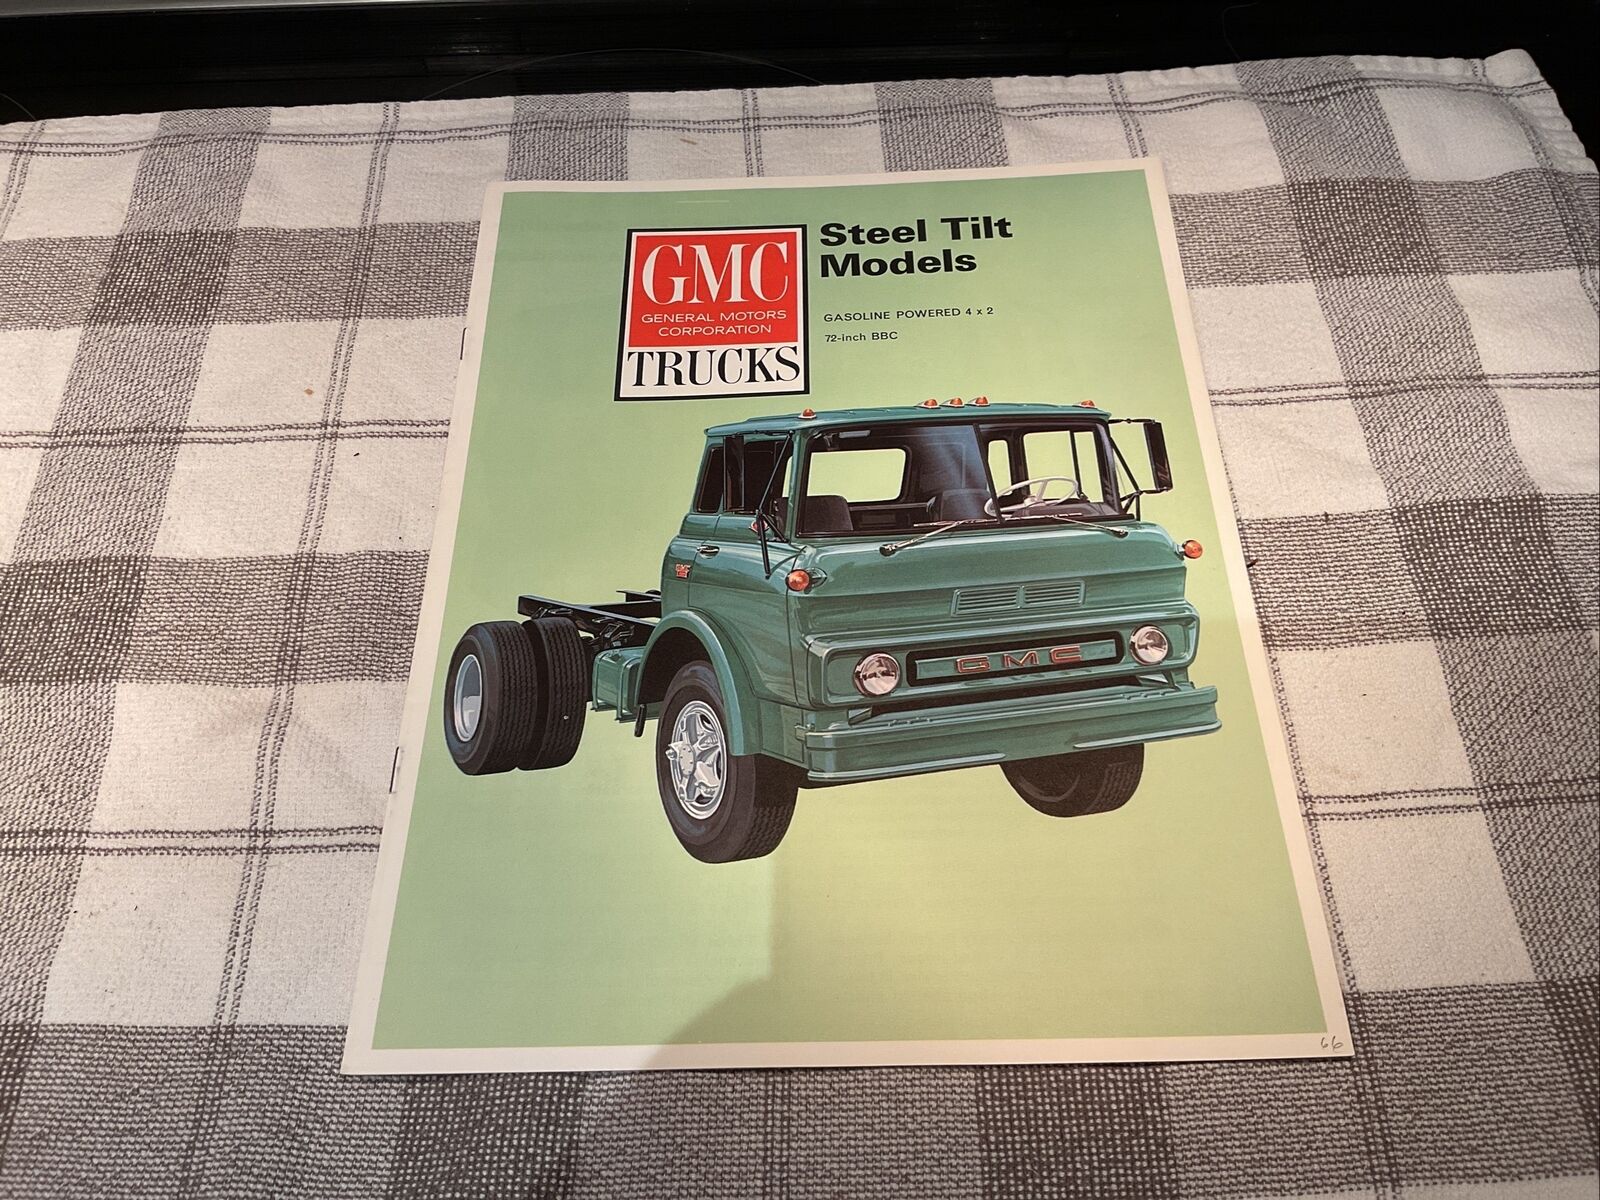 1966 GMC Steel Tilt models Gas powered ￼4x2 Sales brochure